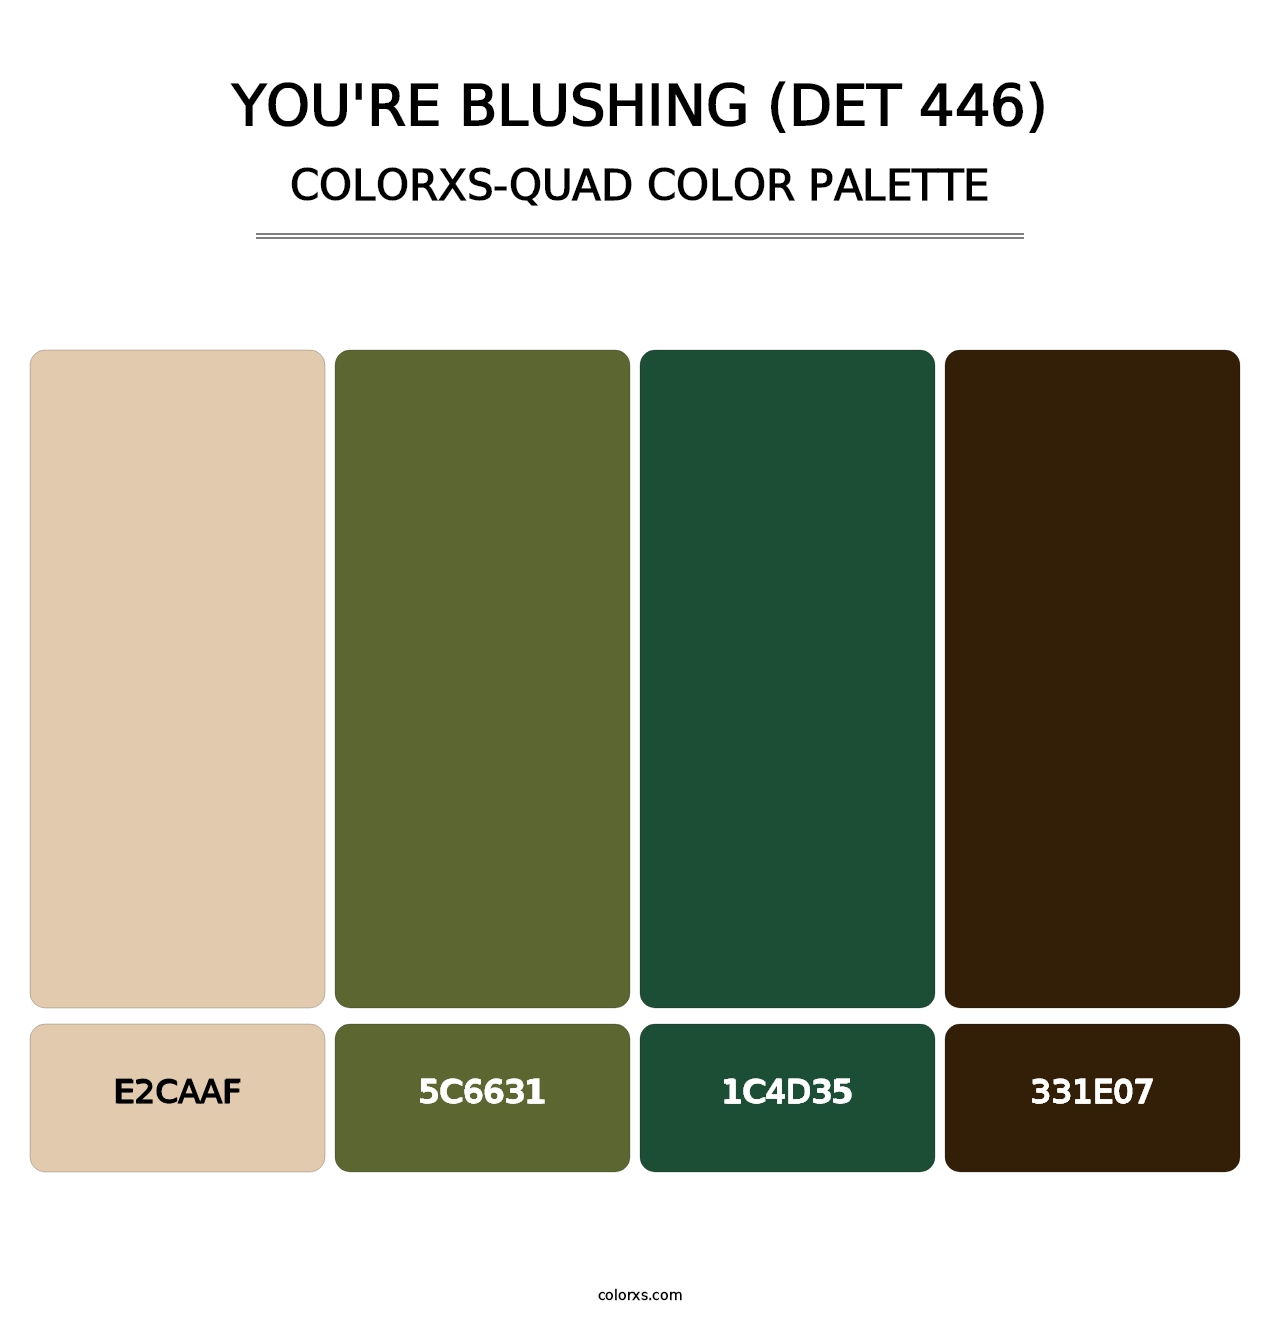 You're Blushing (DET 446) - Colorxs Quad Palette